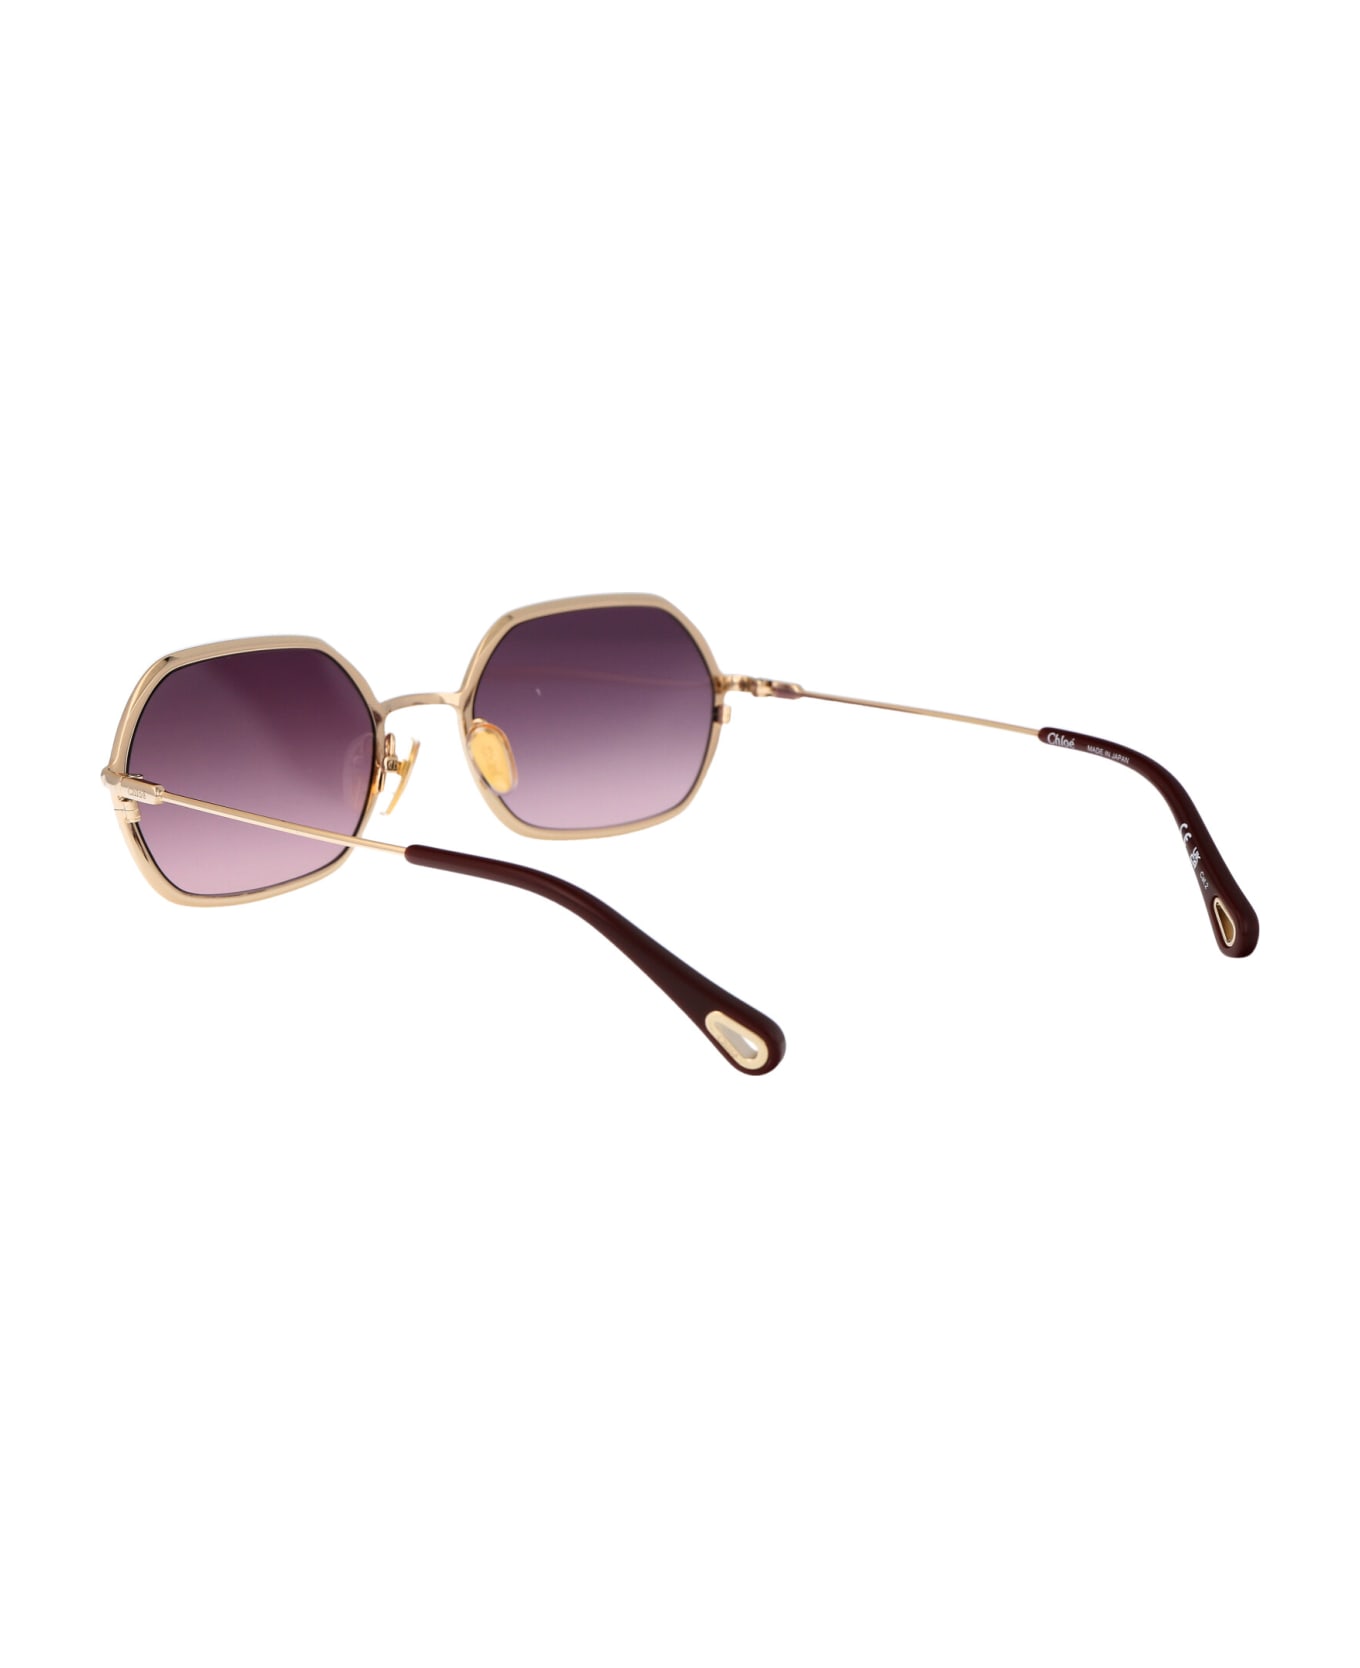 Chloé Eyewear Ch0231s Sunglasses - 003 GOLD GOLD VIOLET